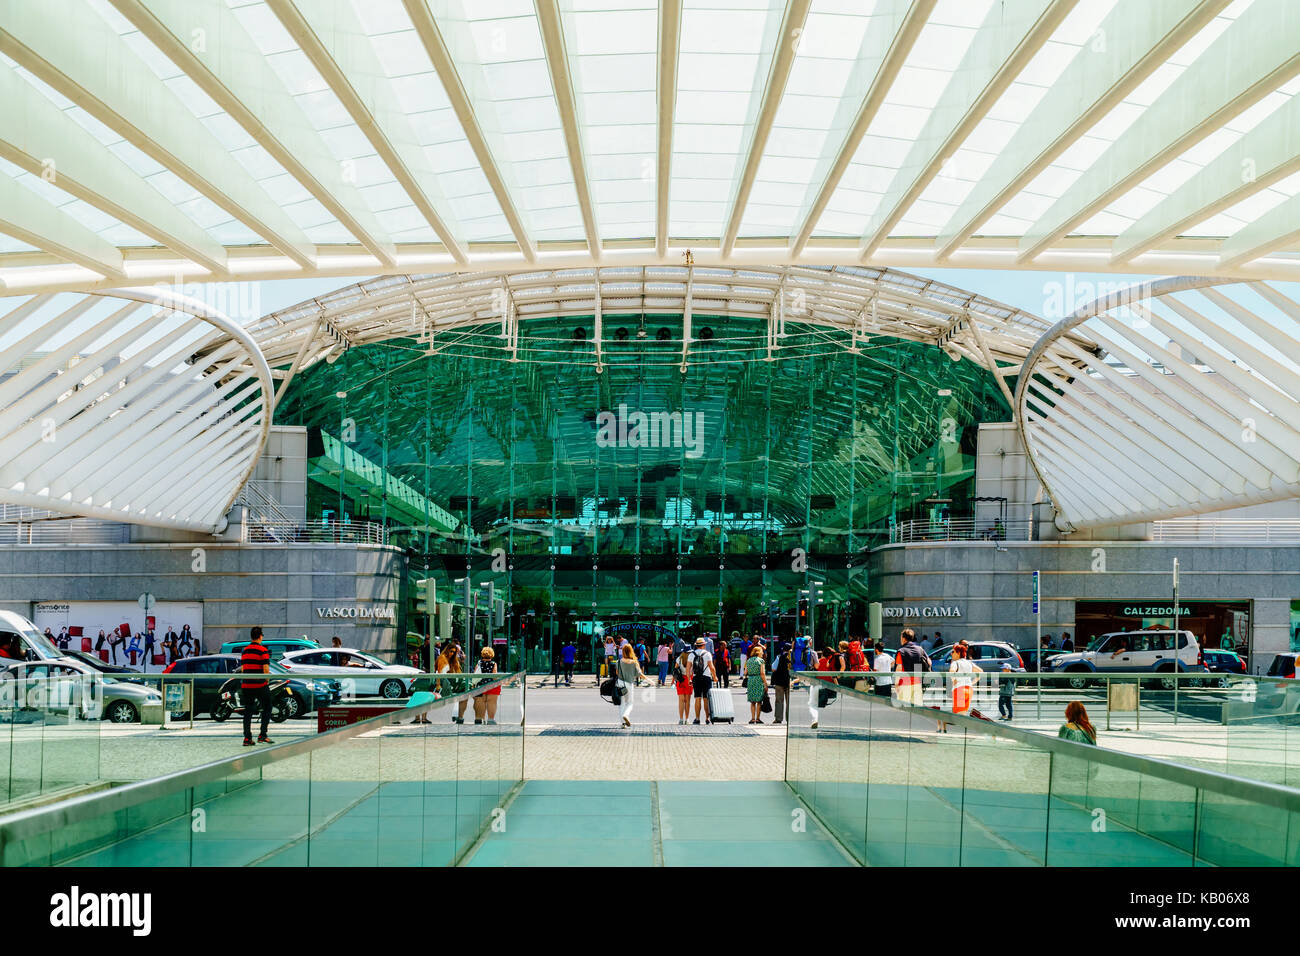 LISBON, PORTUGAL - AUGUST 10, 2017: View From Gare do Oriente (Lisbon Oriente Station) Towards Vasco da Gama Shopping Center Mall. Stock Photo